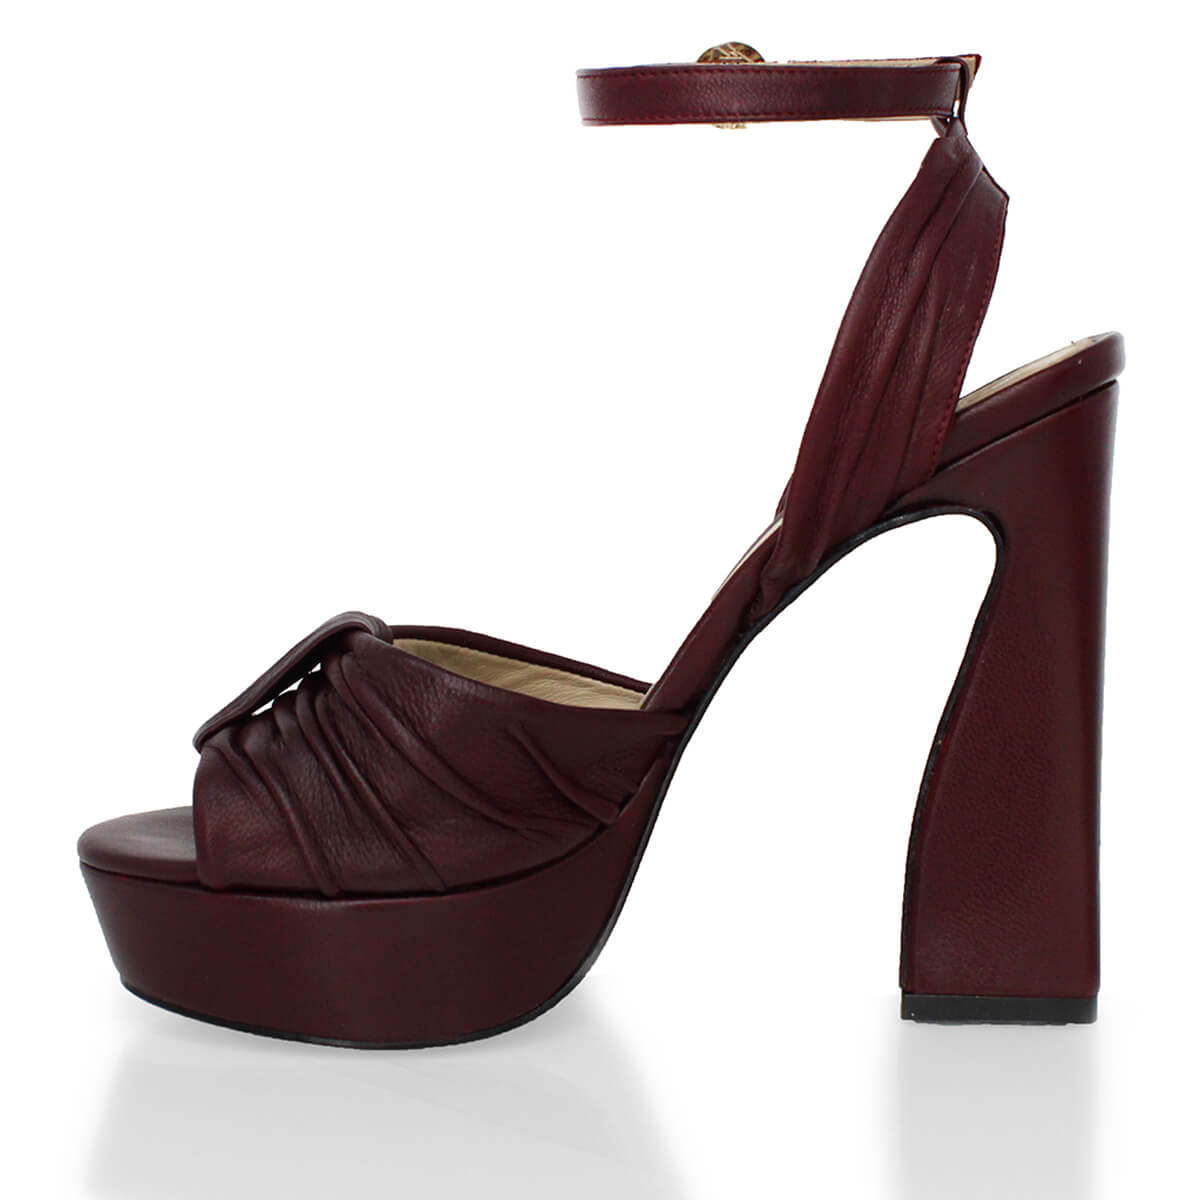 BERNADETTE 125 - Wine Regina Romero High Heel Platform Sandal Shoe for Women in Leather